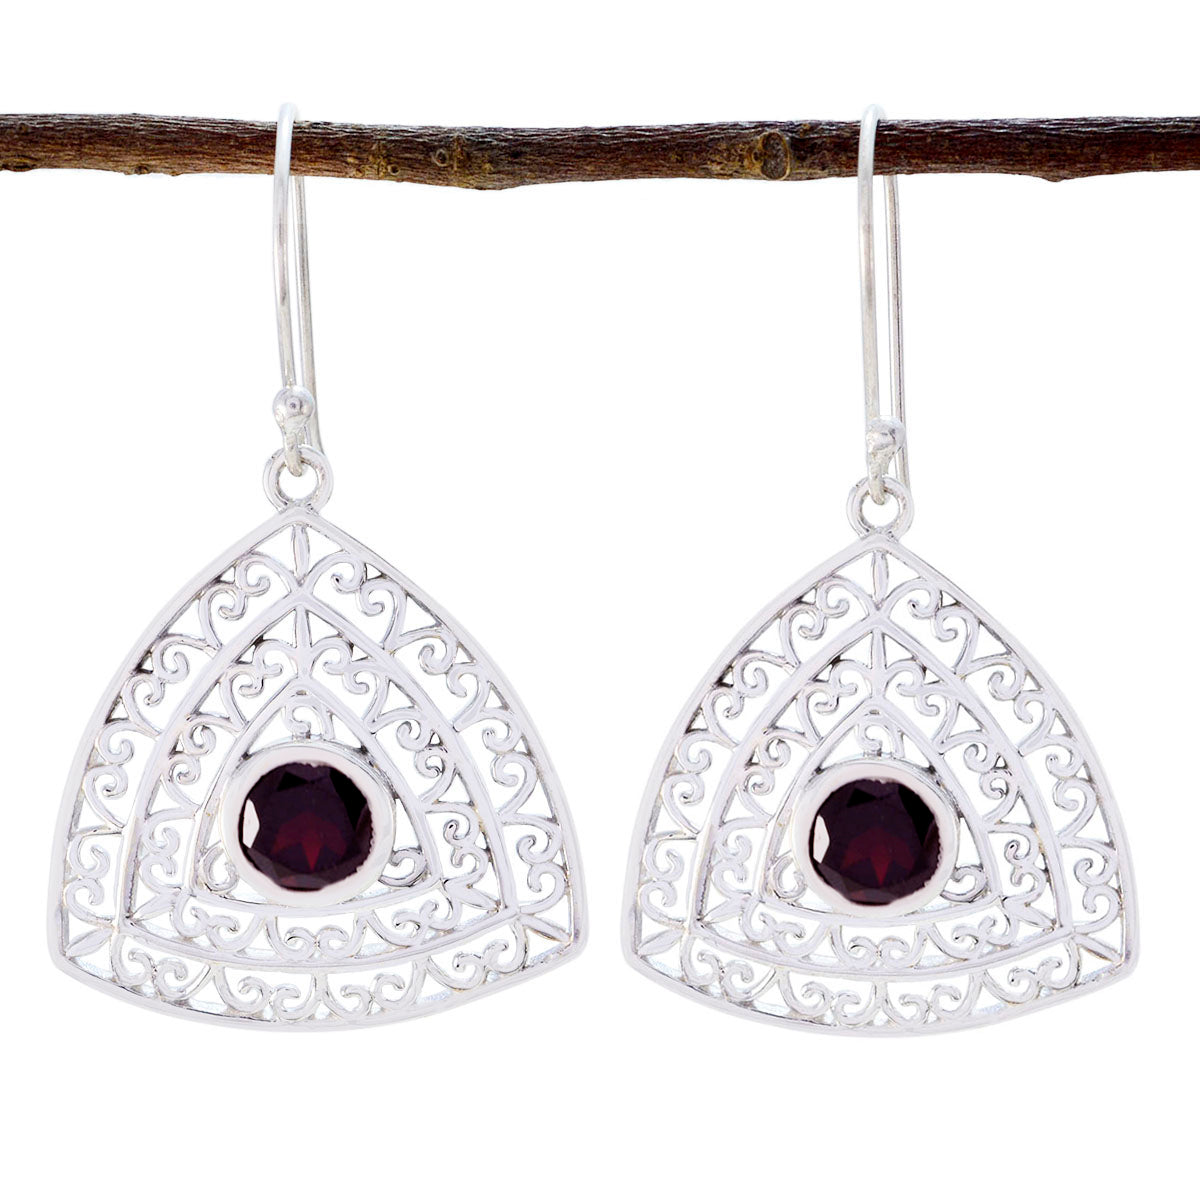 Riyo Real Gemstones round Faceted Red Garnet Silver Earring st. patricks day gift